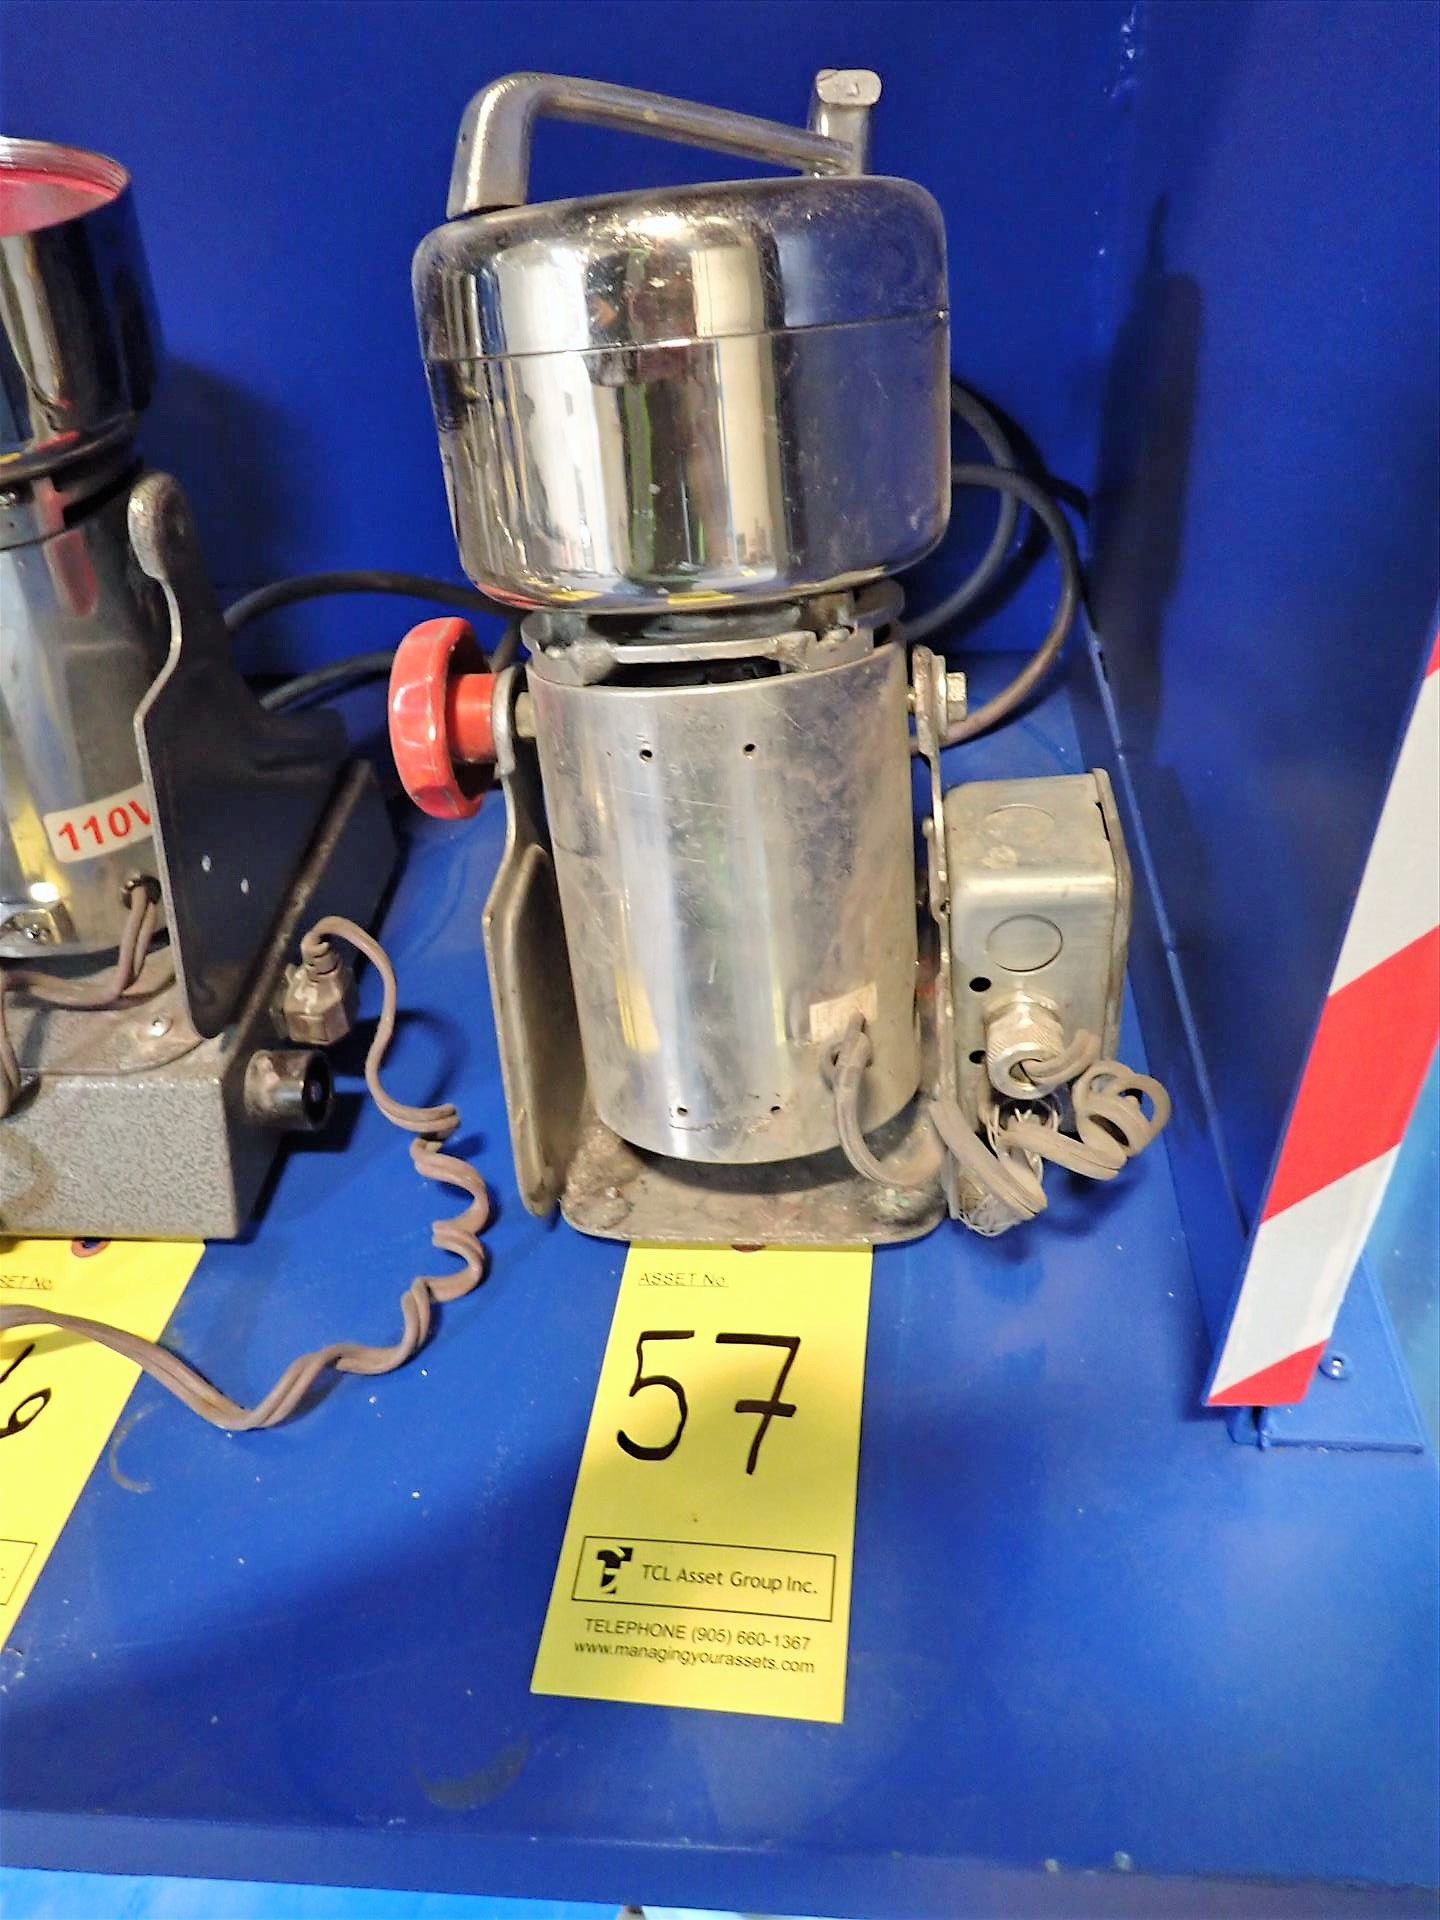 Strand lab grinder, mod. S101DS (requires repair)